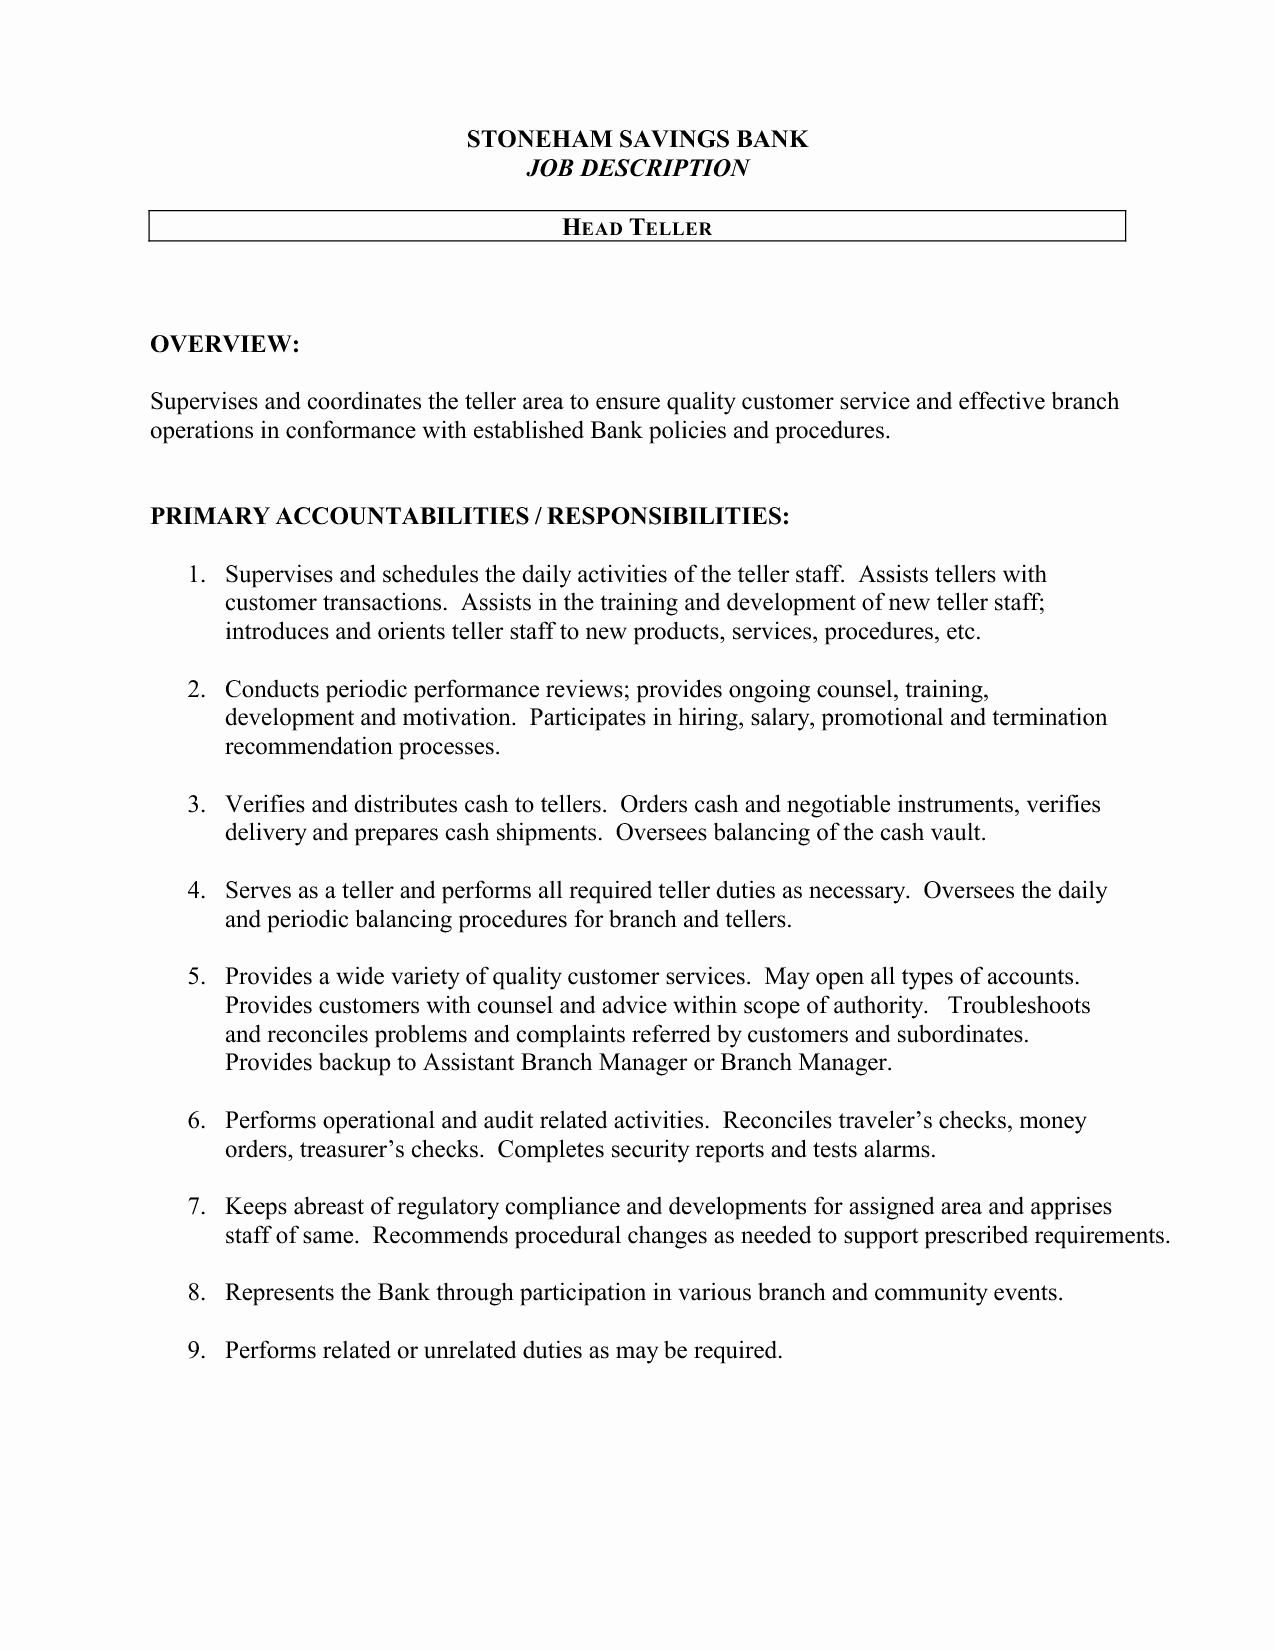 Bank Teller Job Description Resume Sample